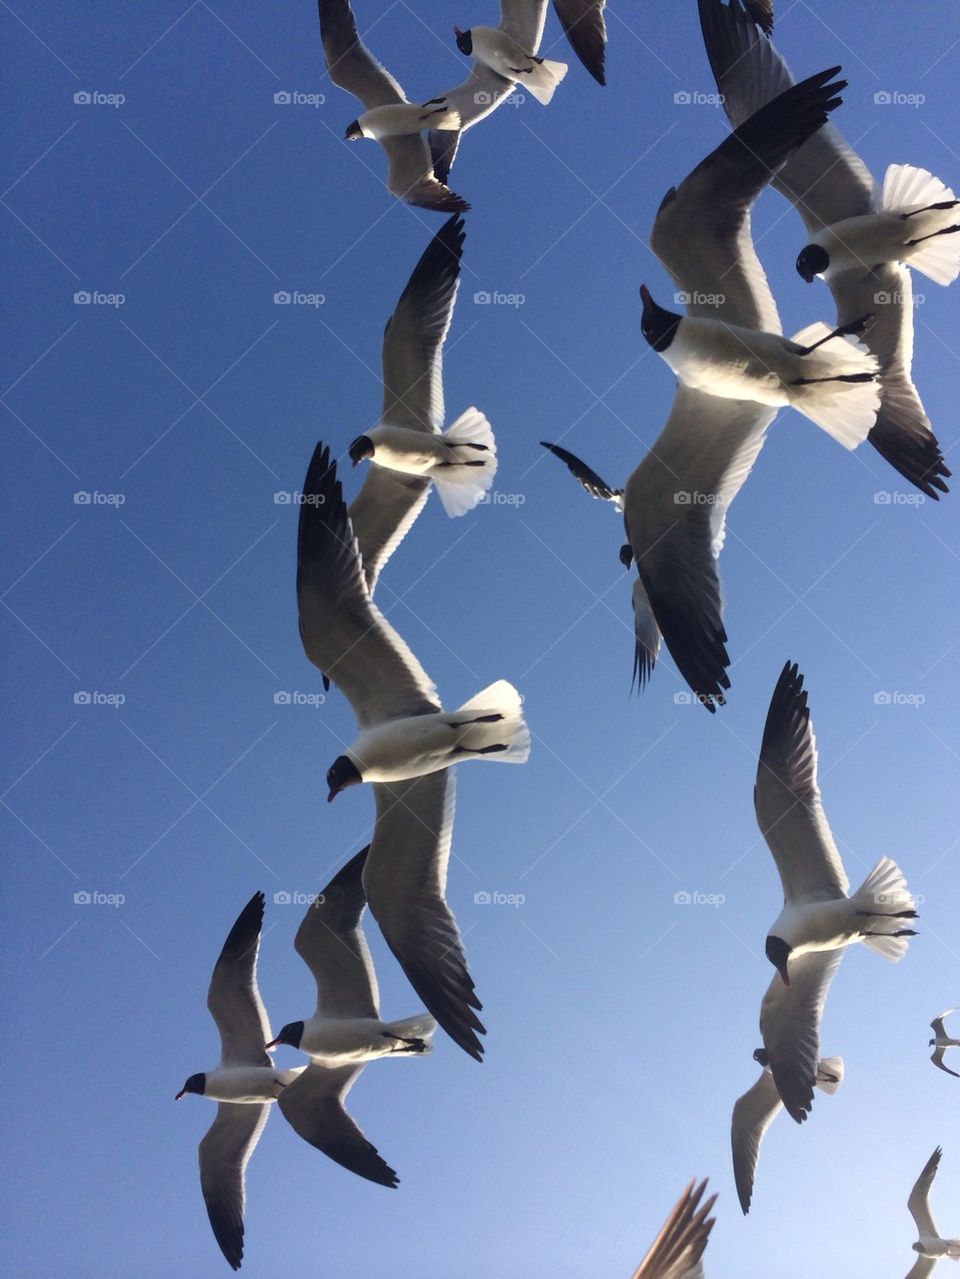 Seagulls flocking